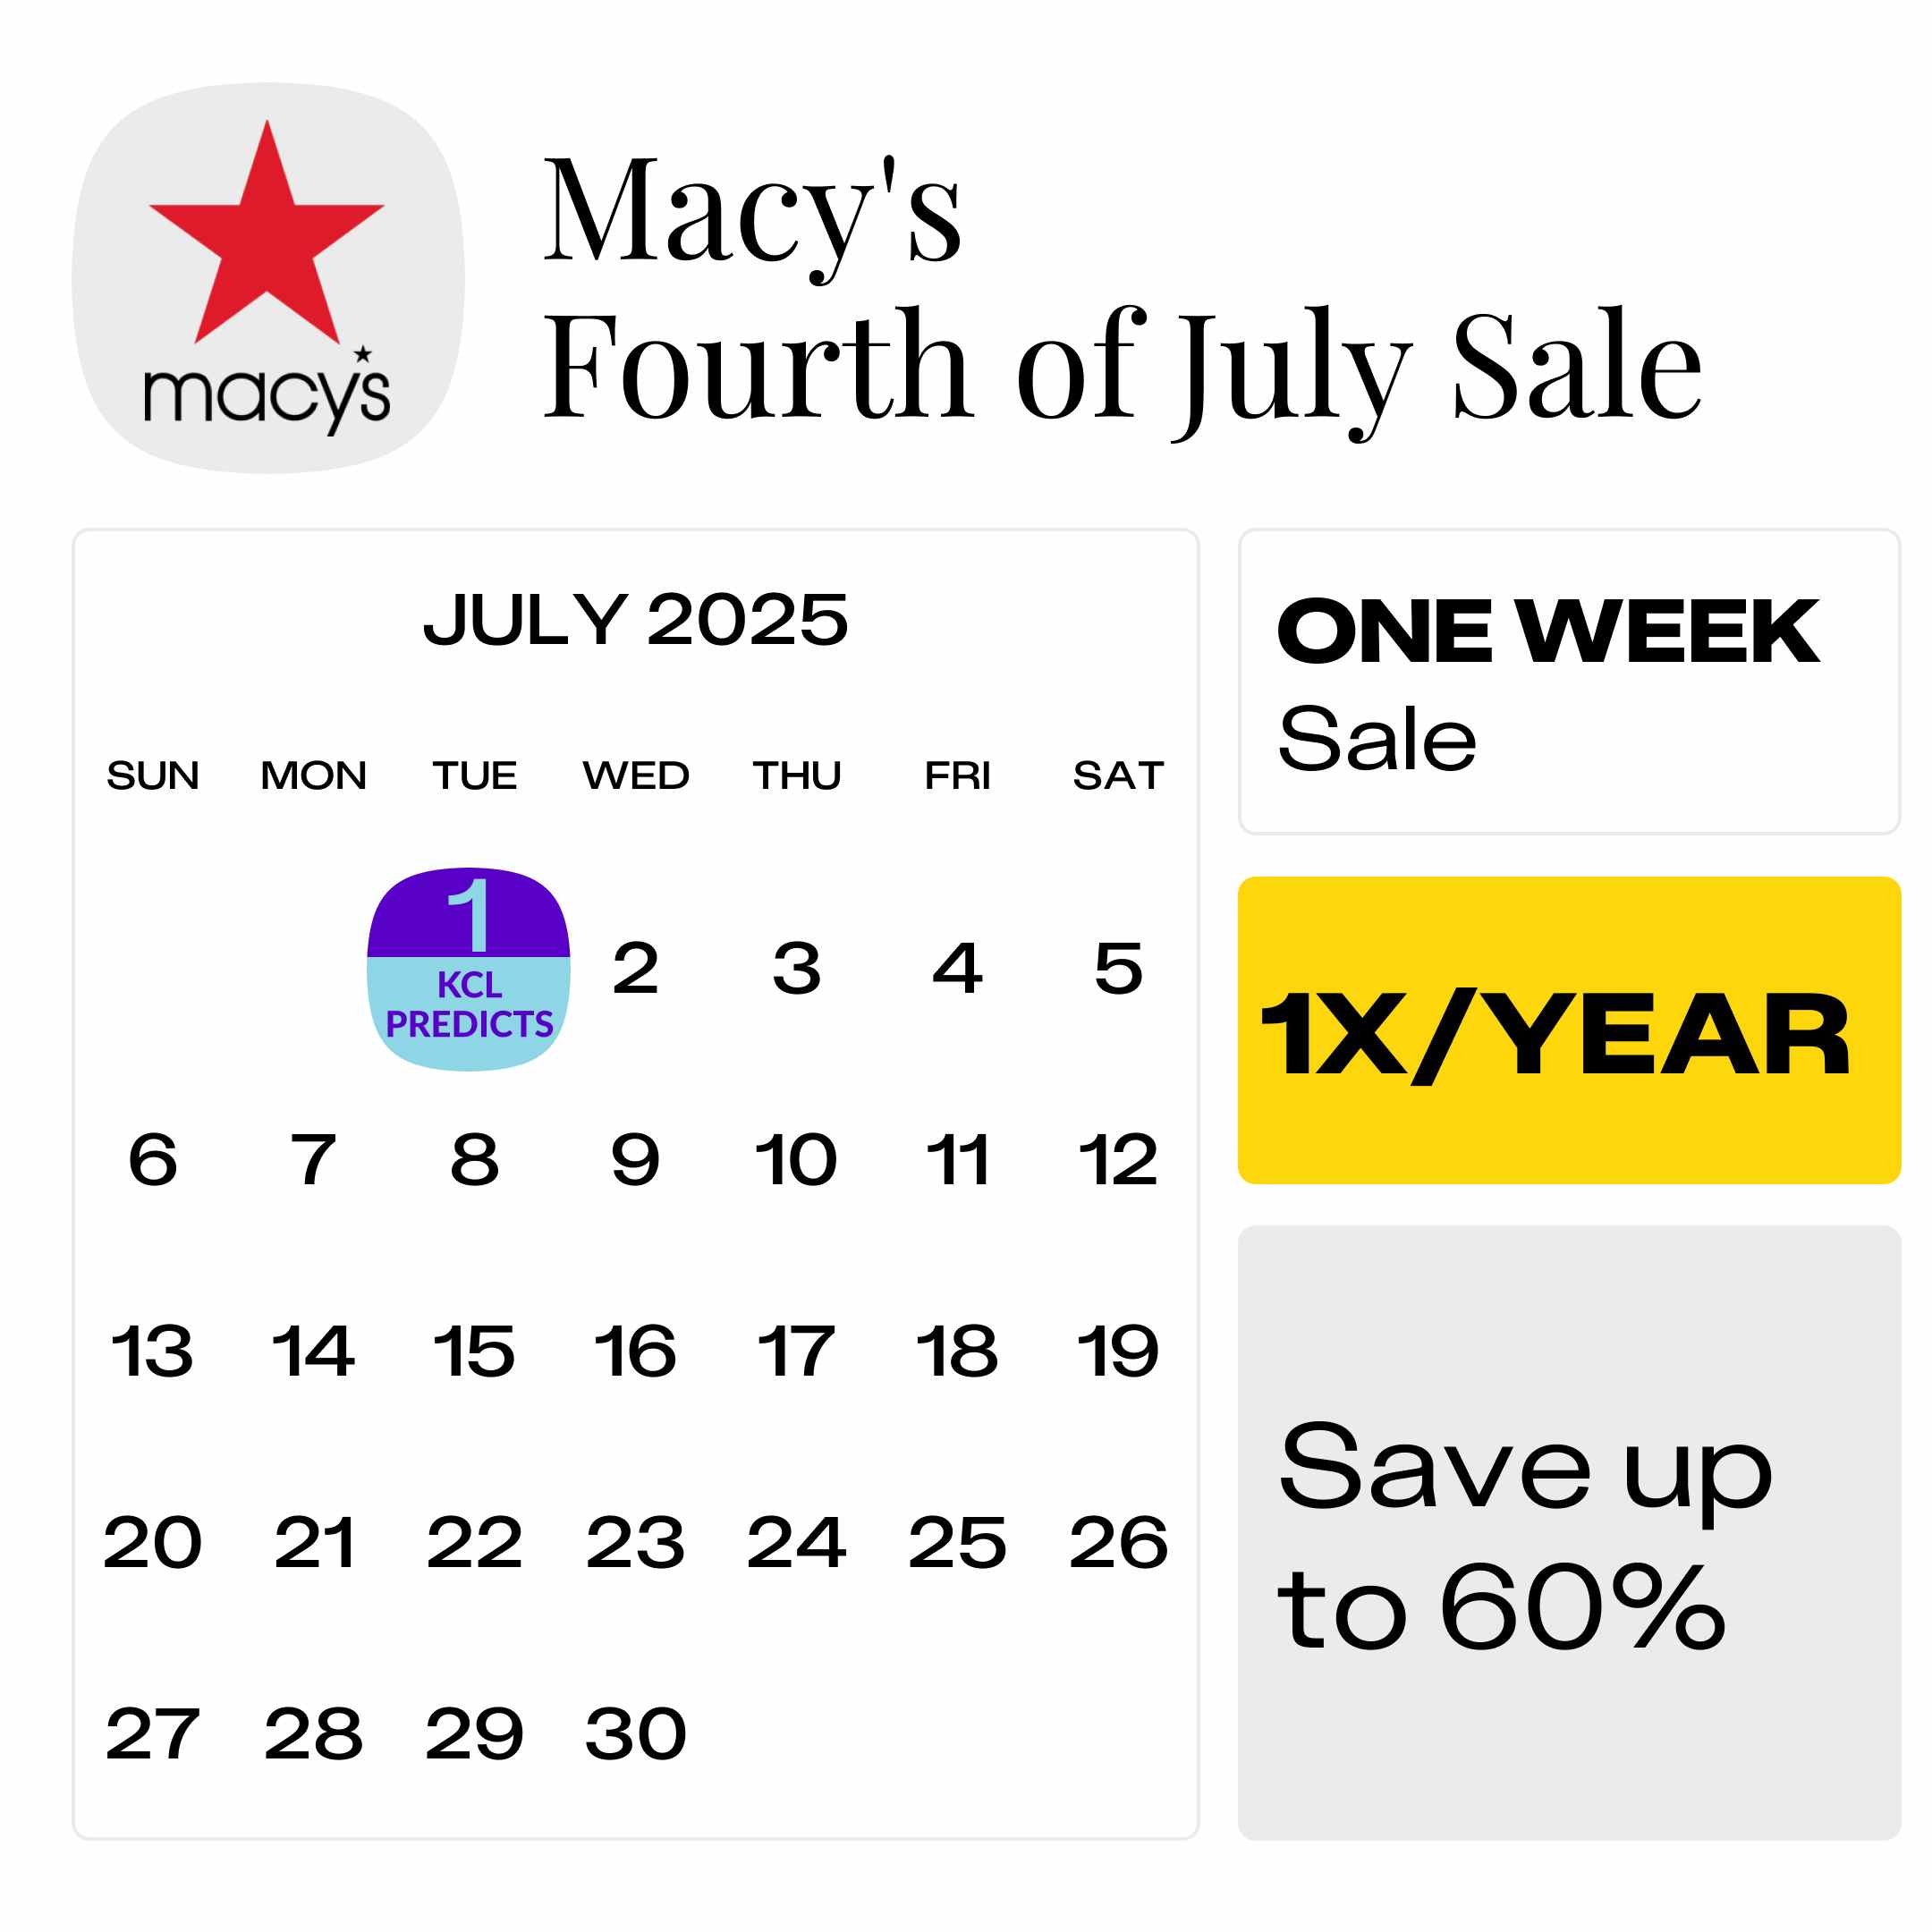 Macys-Fourth-of-July-Sale-2025 (1)